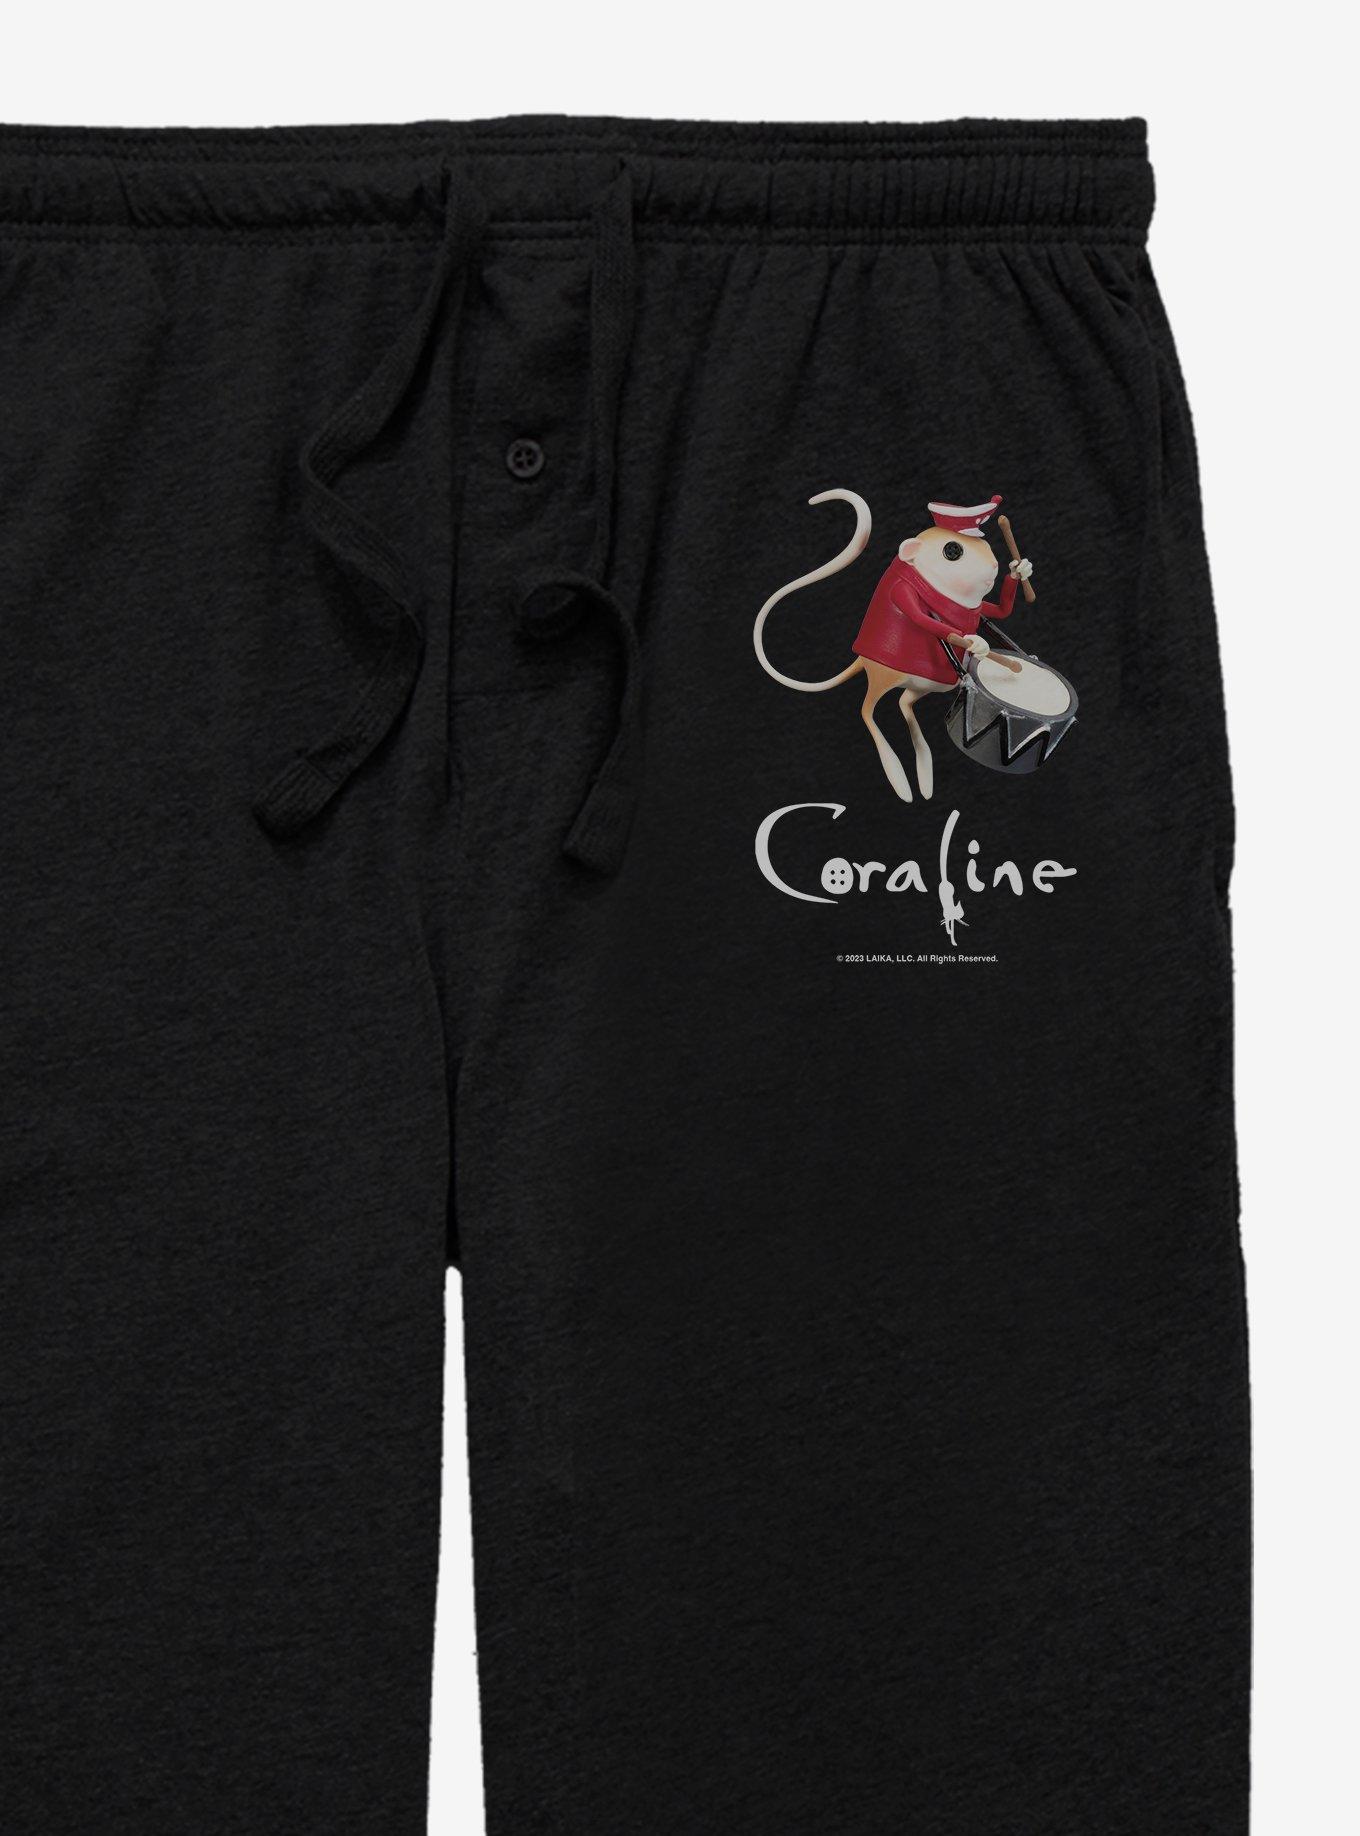 Coraline Circus Mouse Snare Drum Pajama Pants, BLACK, alternate